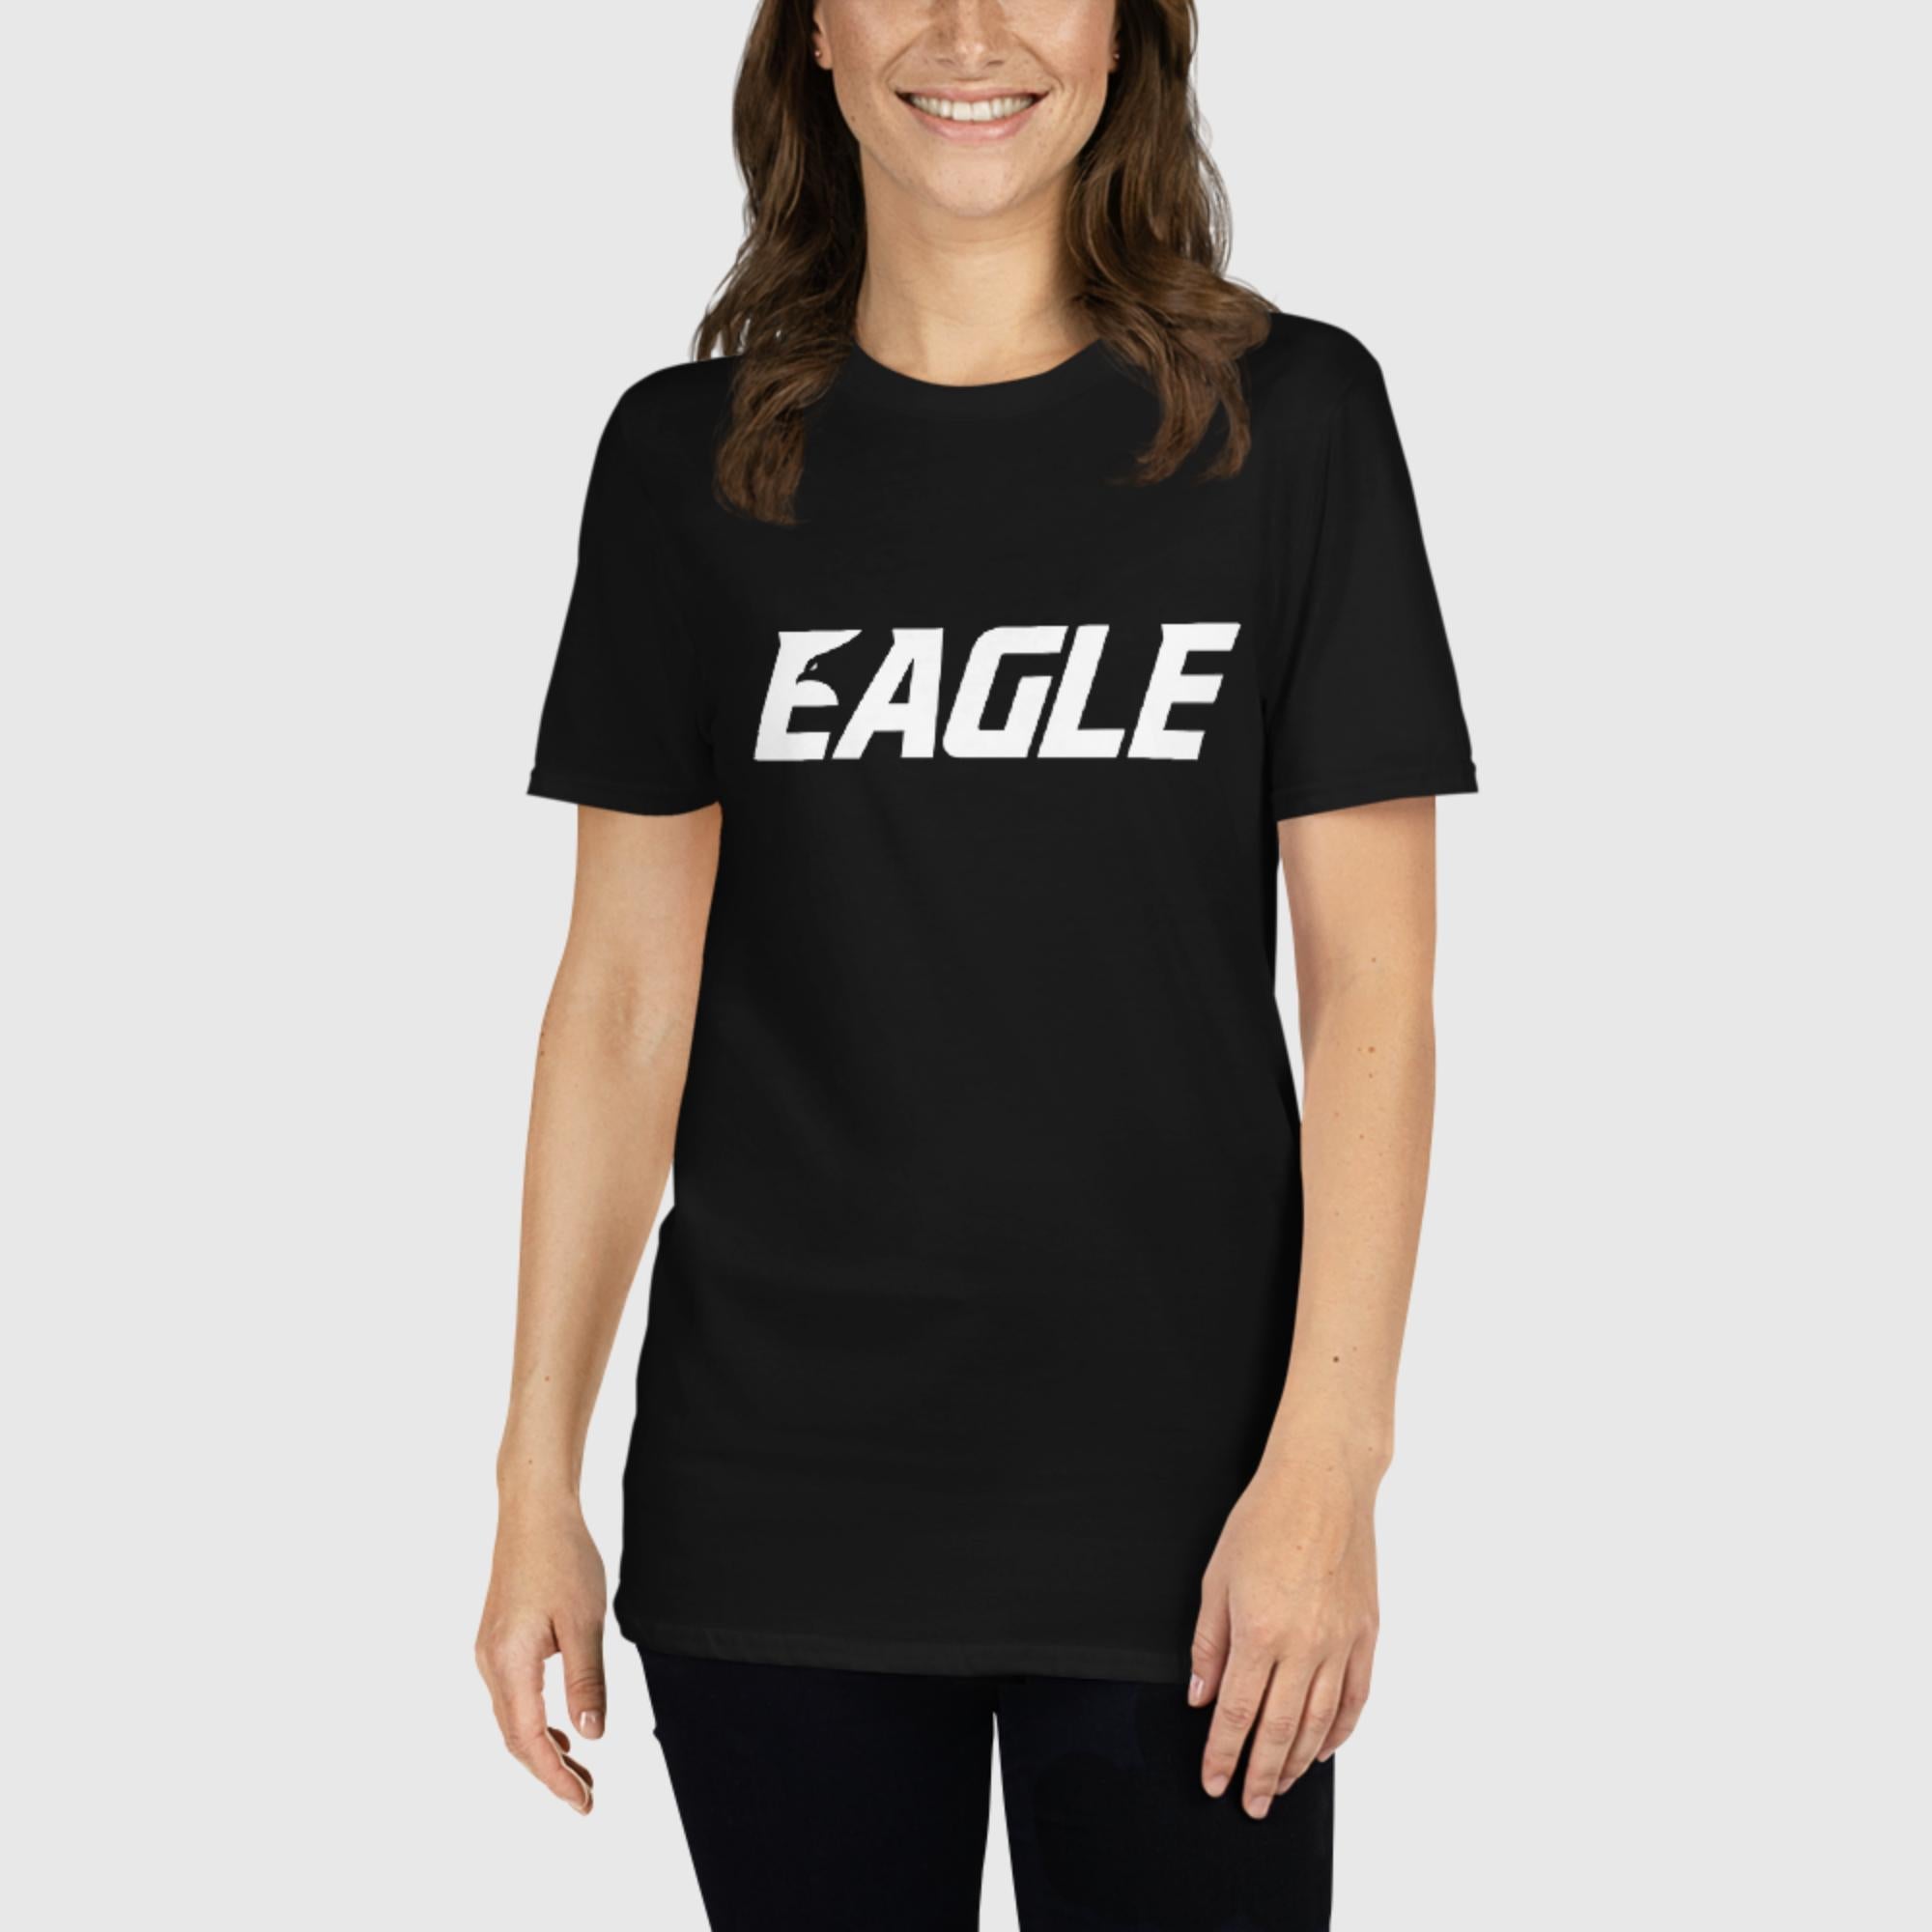 T-Shirt Black - Eagle